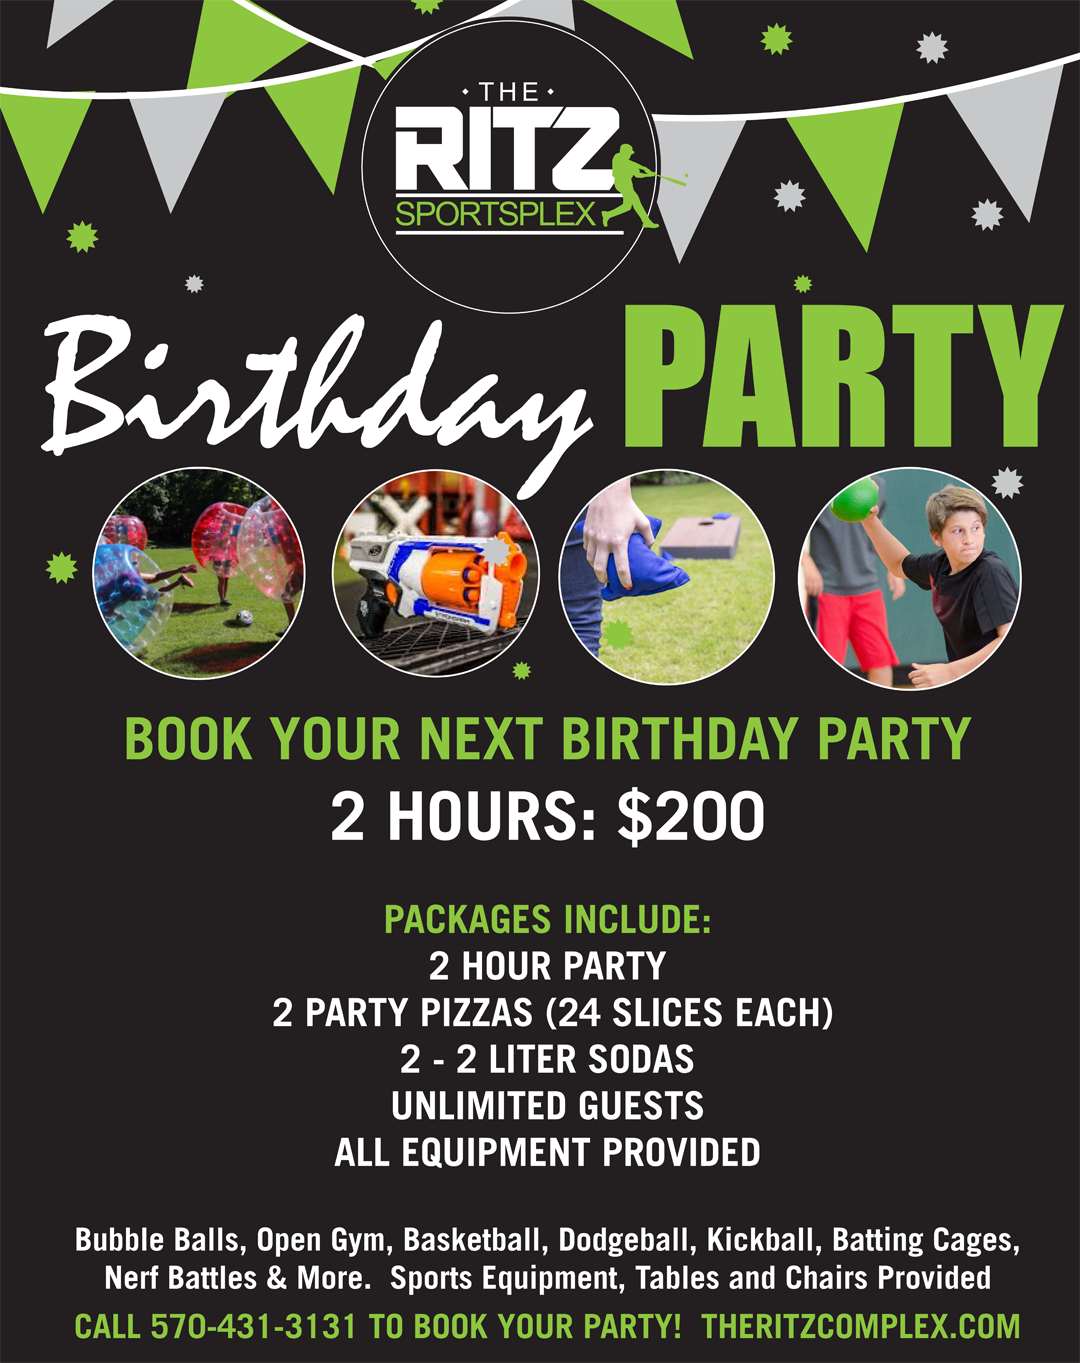 Private Party Rentals   The Ritz Sportsplex